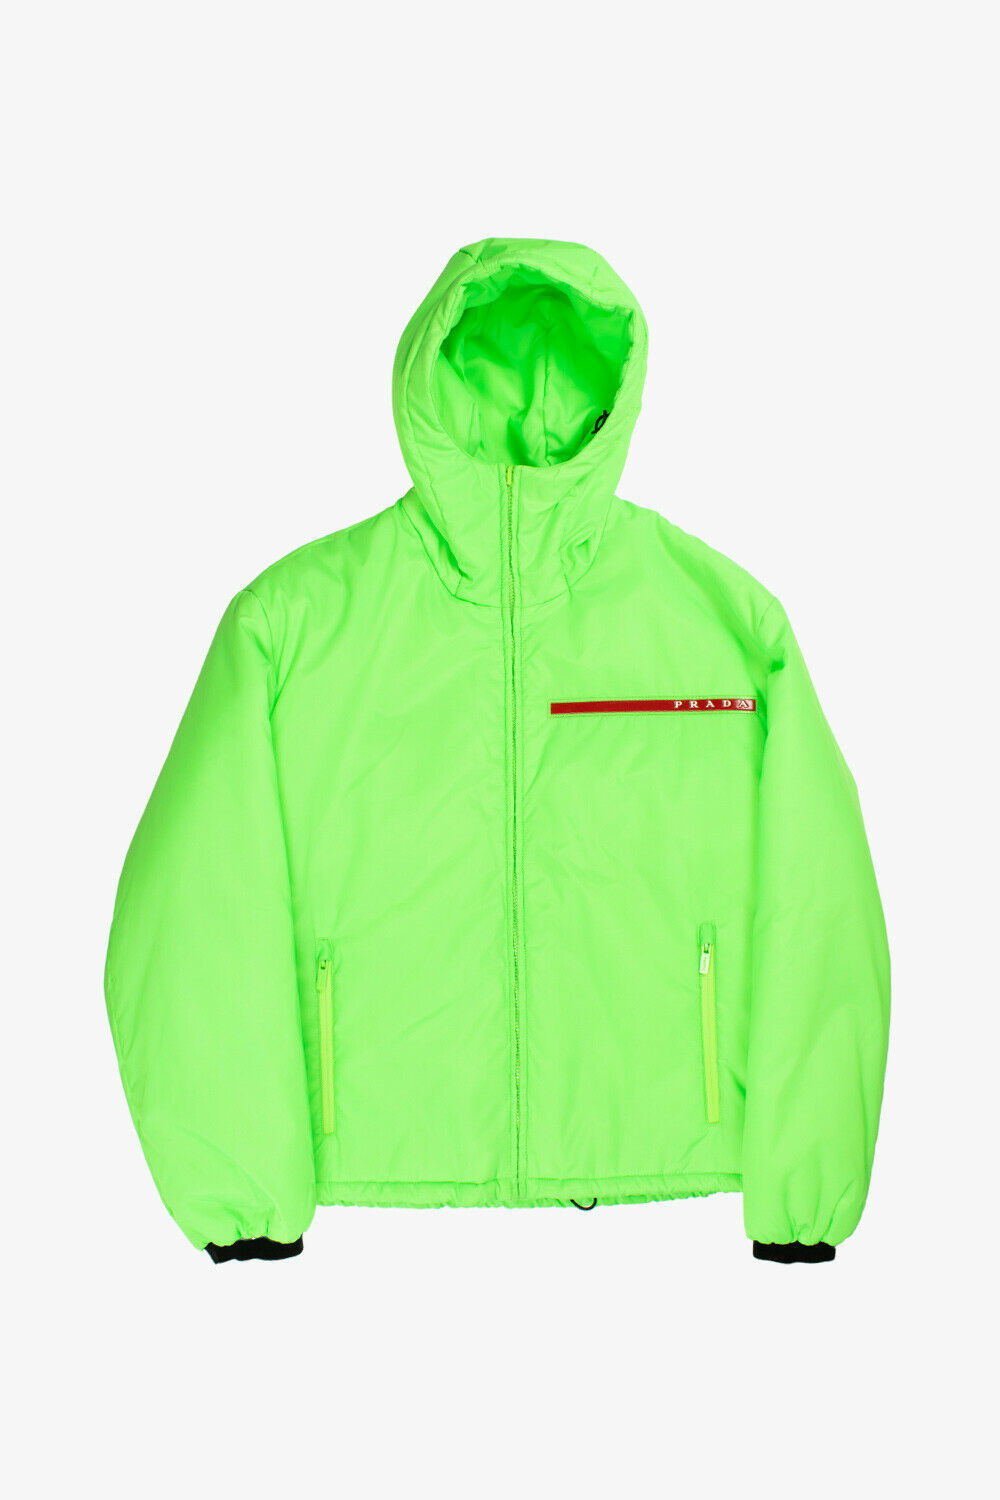 prada jacket green